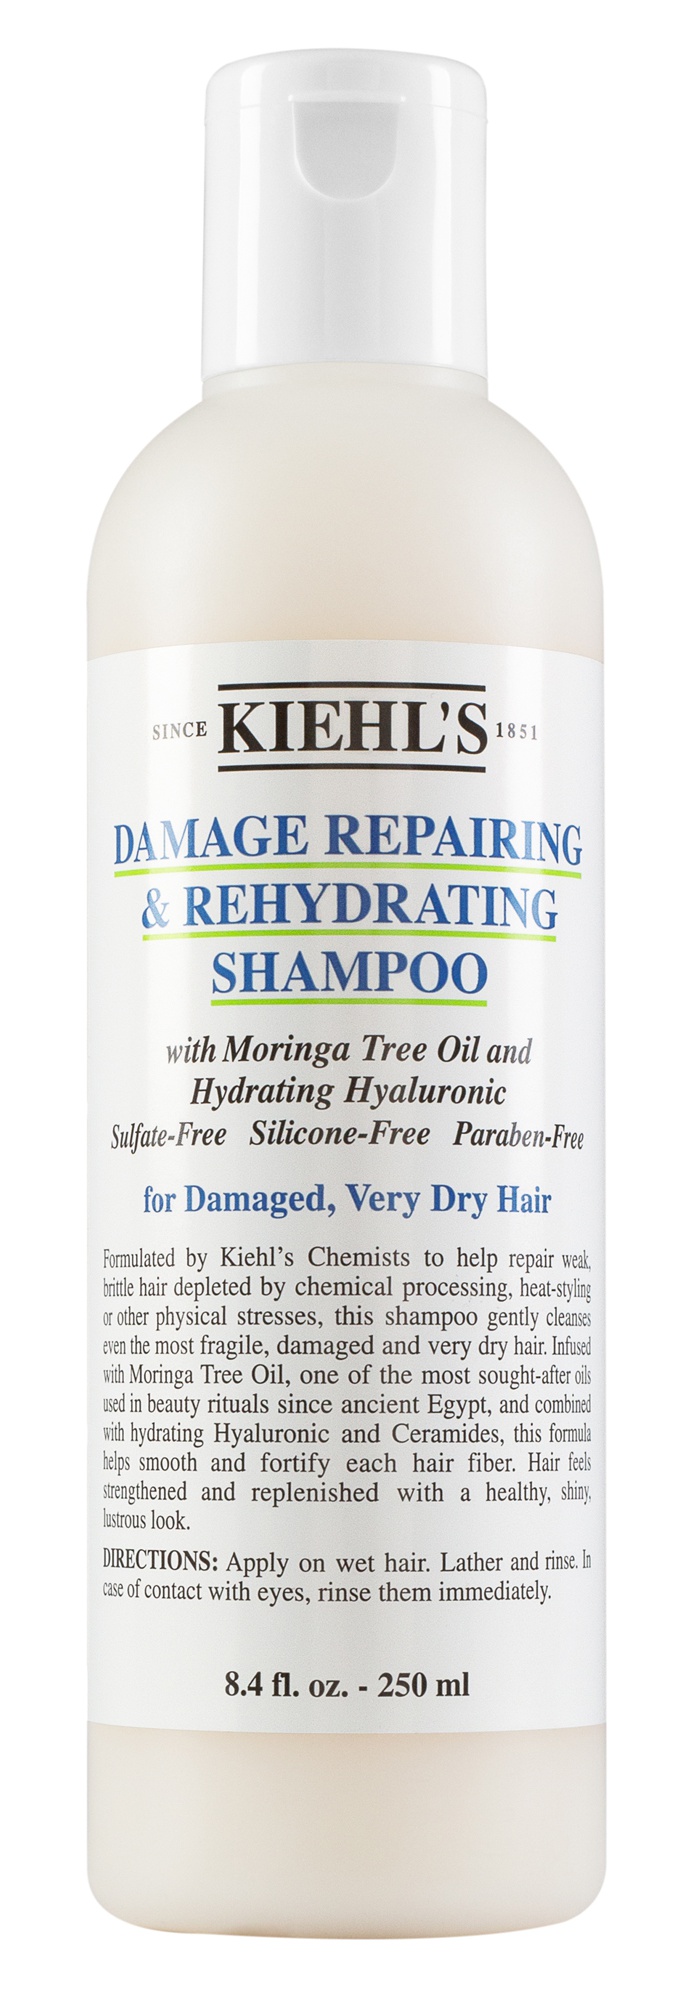 Kiehl’s Damage Repairing & Rehydrating Shampoo